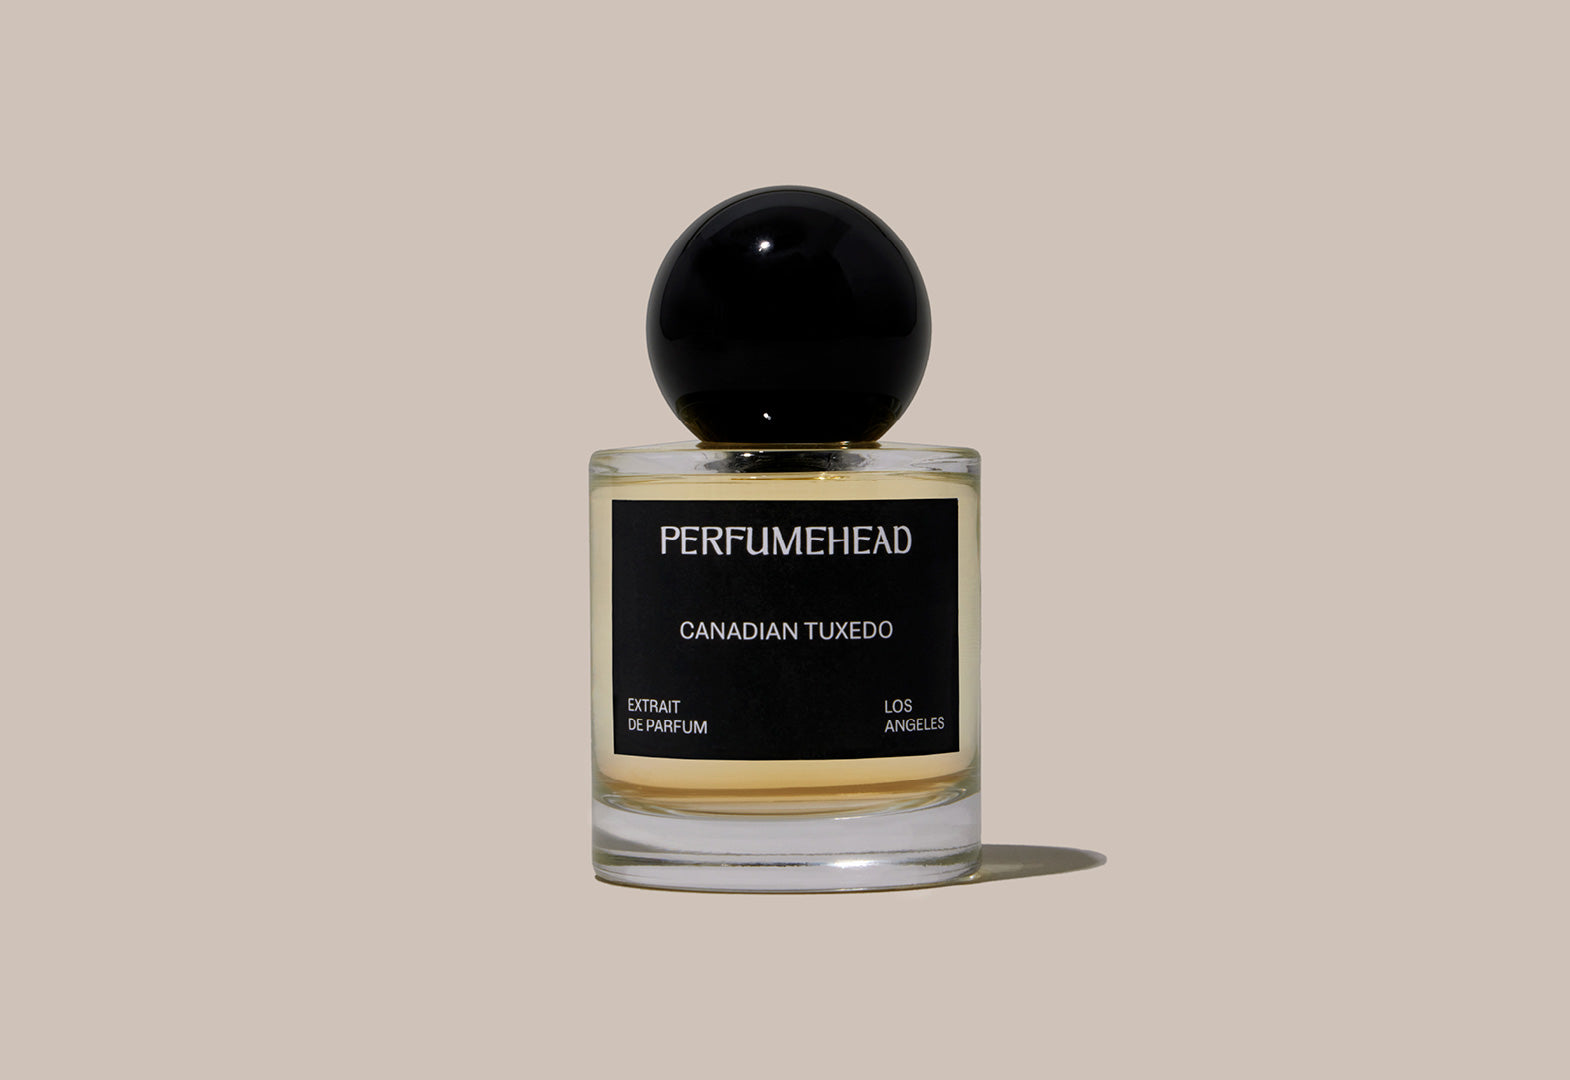 Jewels Louis Cardin perfume - a fragrance for women 2020